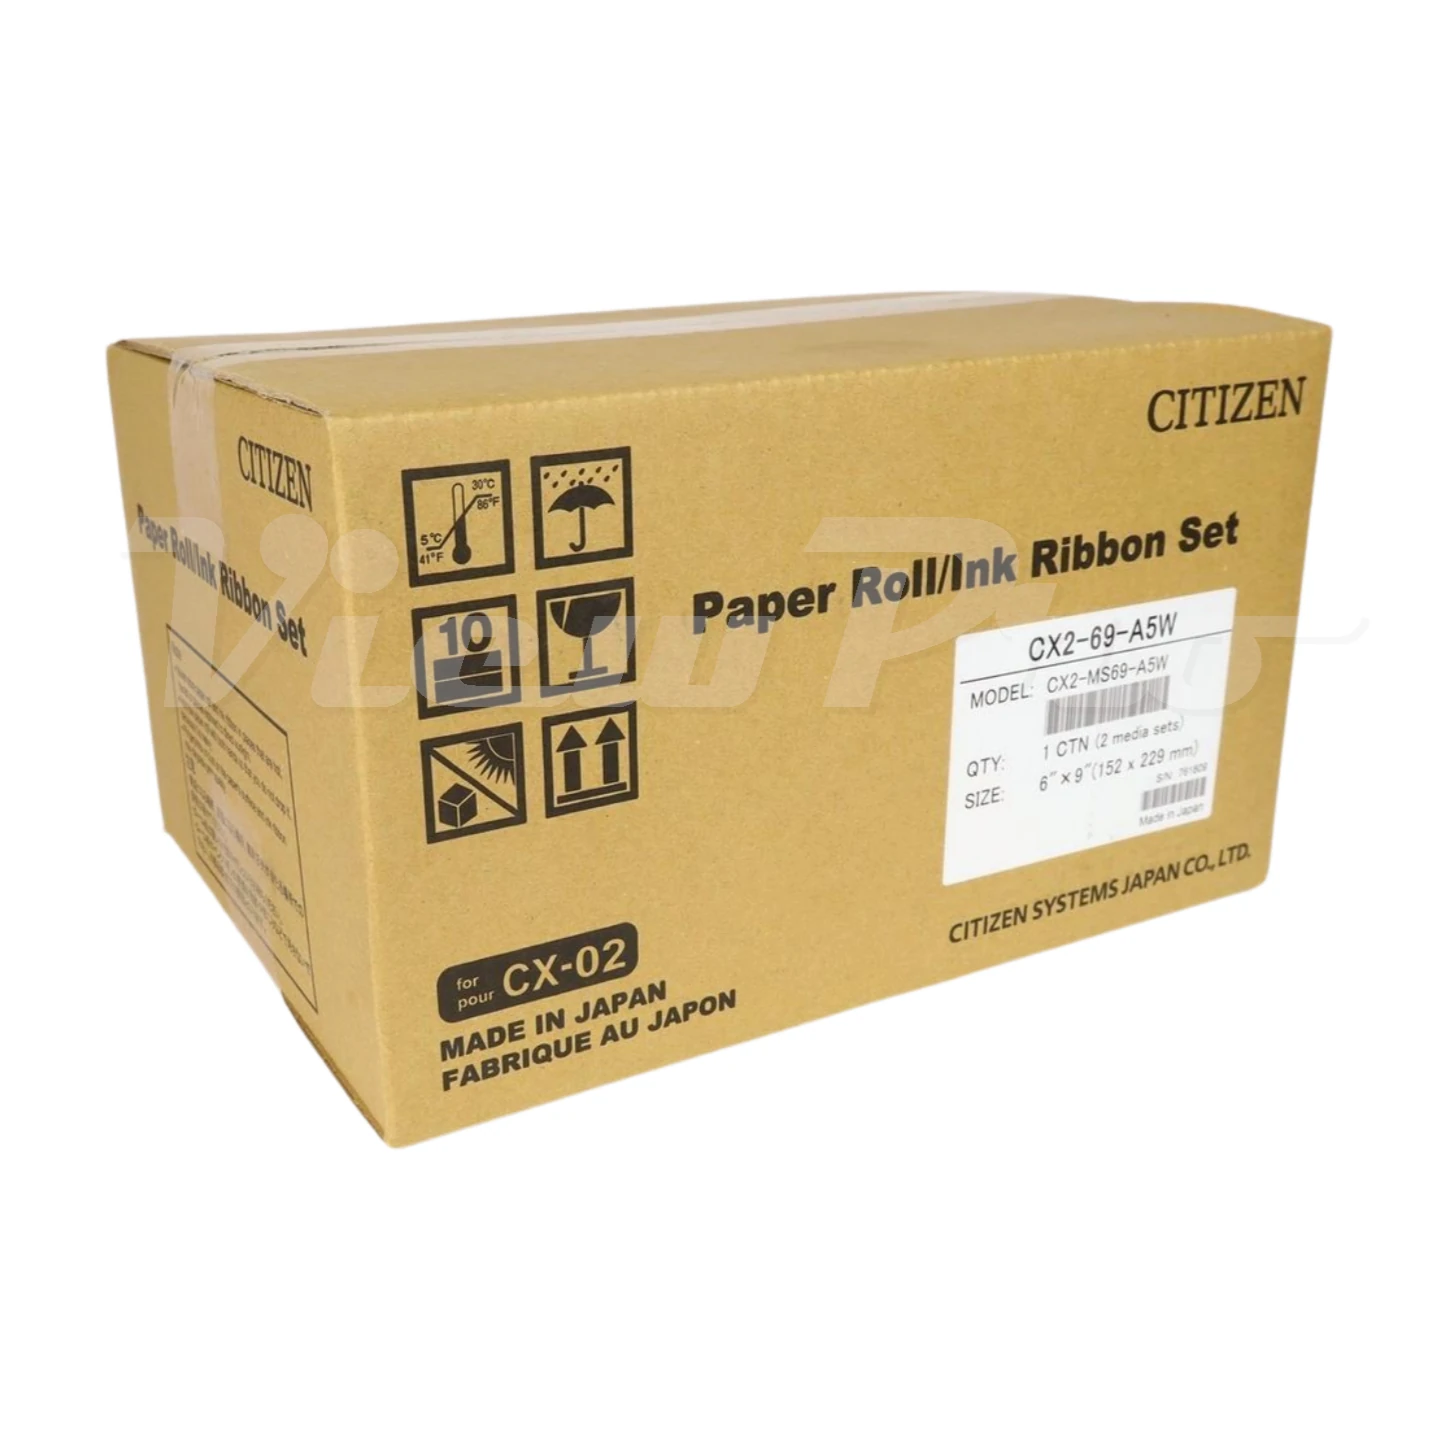 Citizen Media Box CX2-69-A5W Paper Roll-Ink Ribbon Set